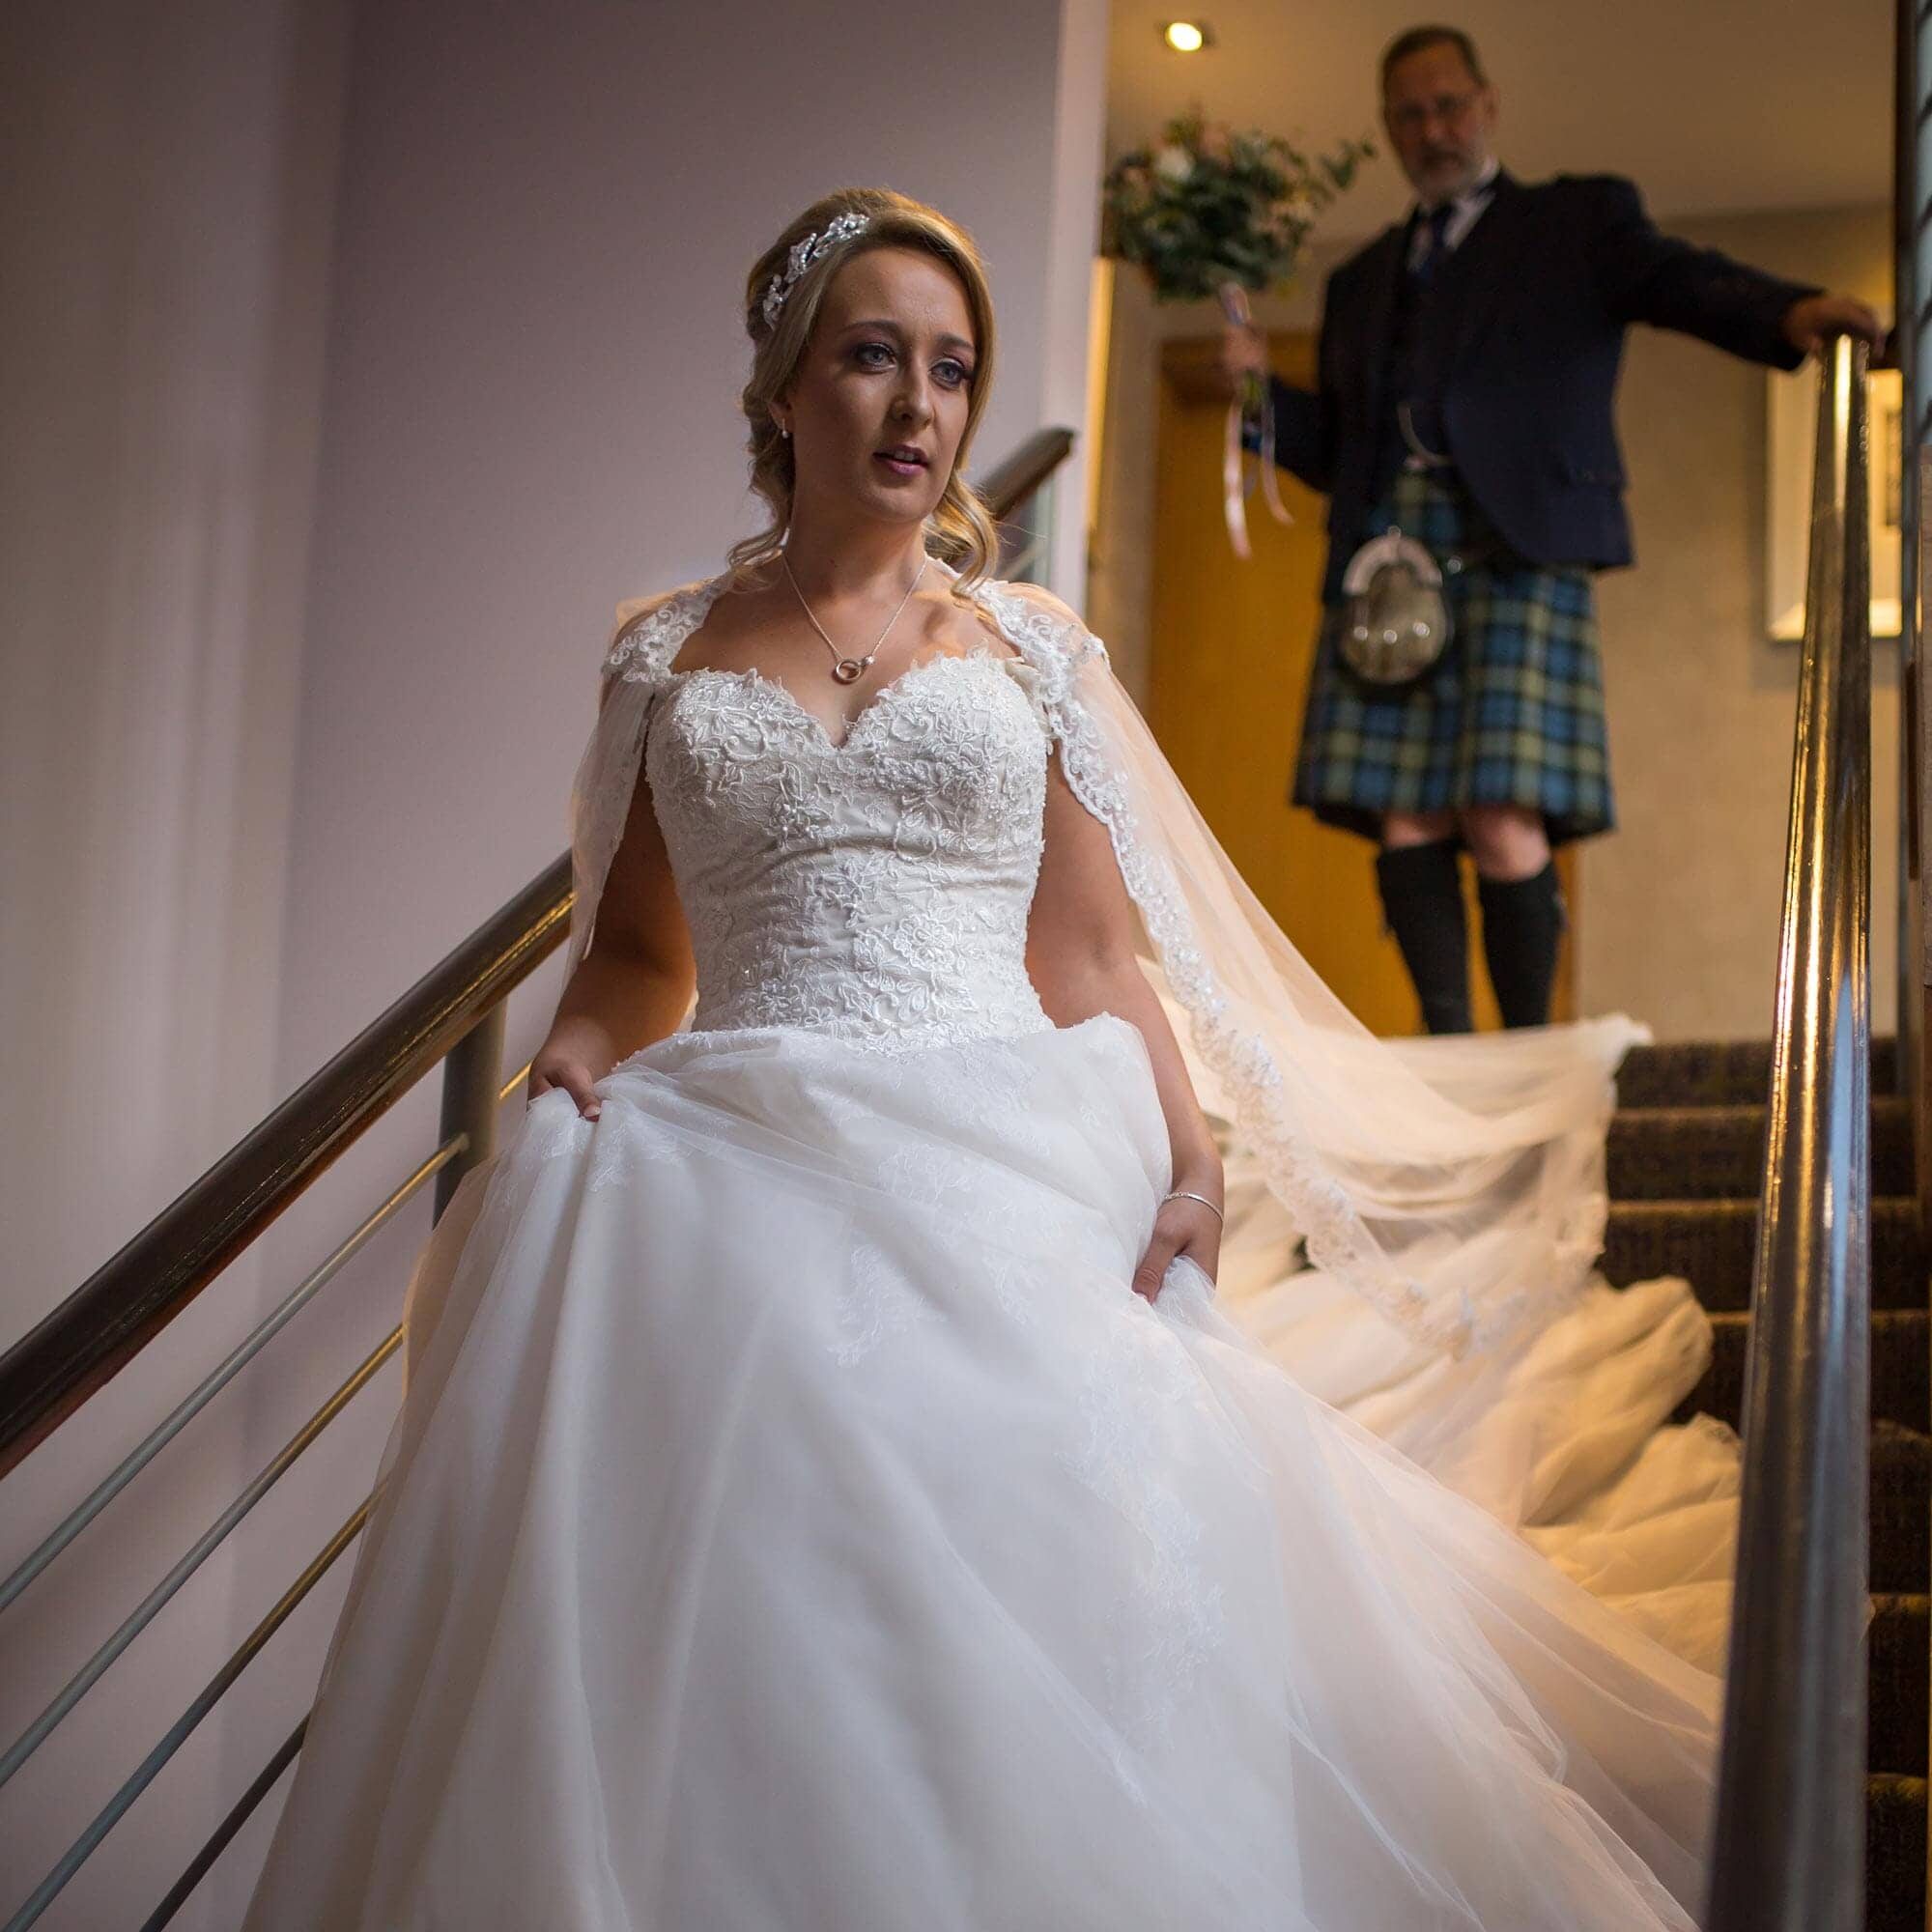 Bride walking down stairs with dad behind her